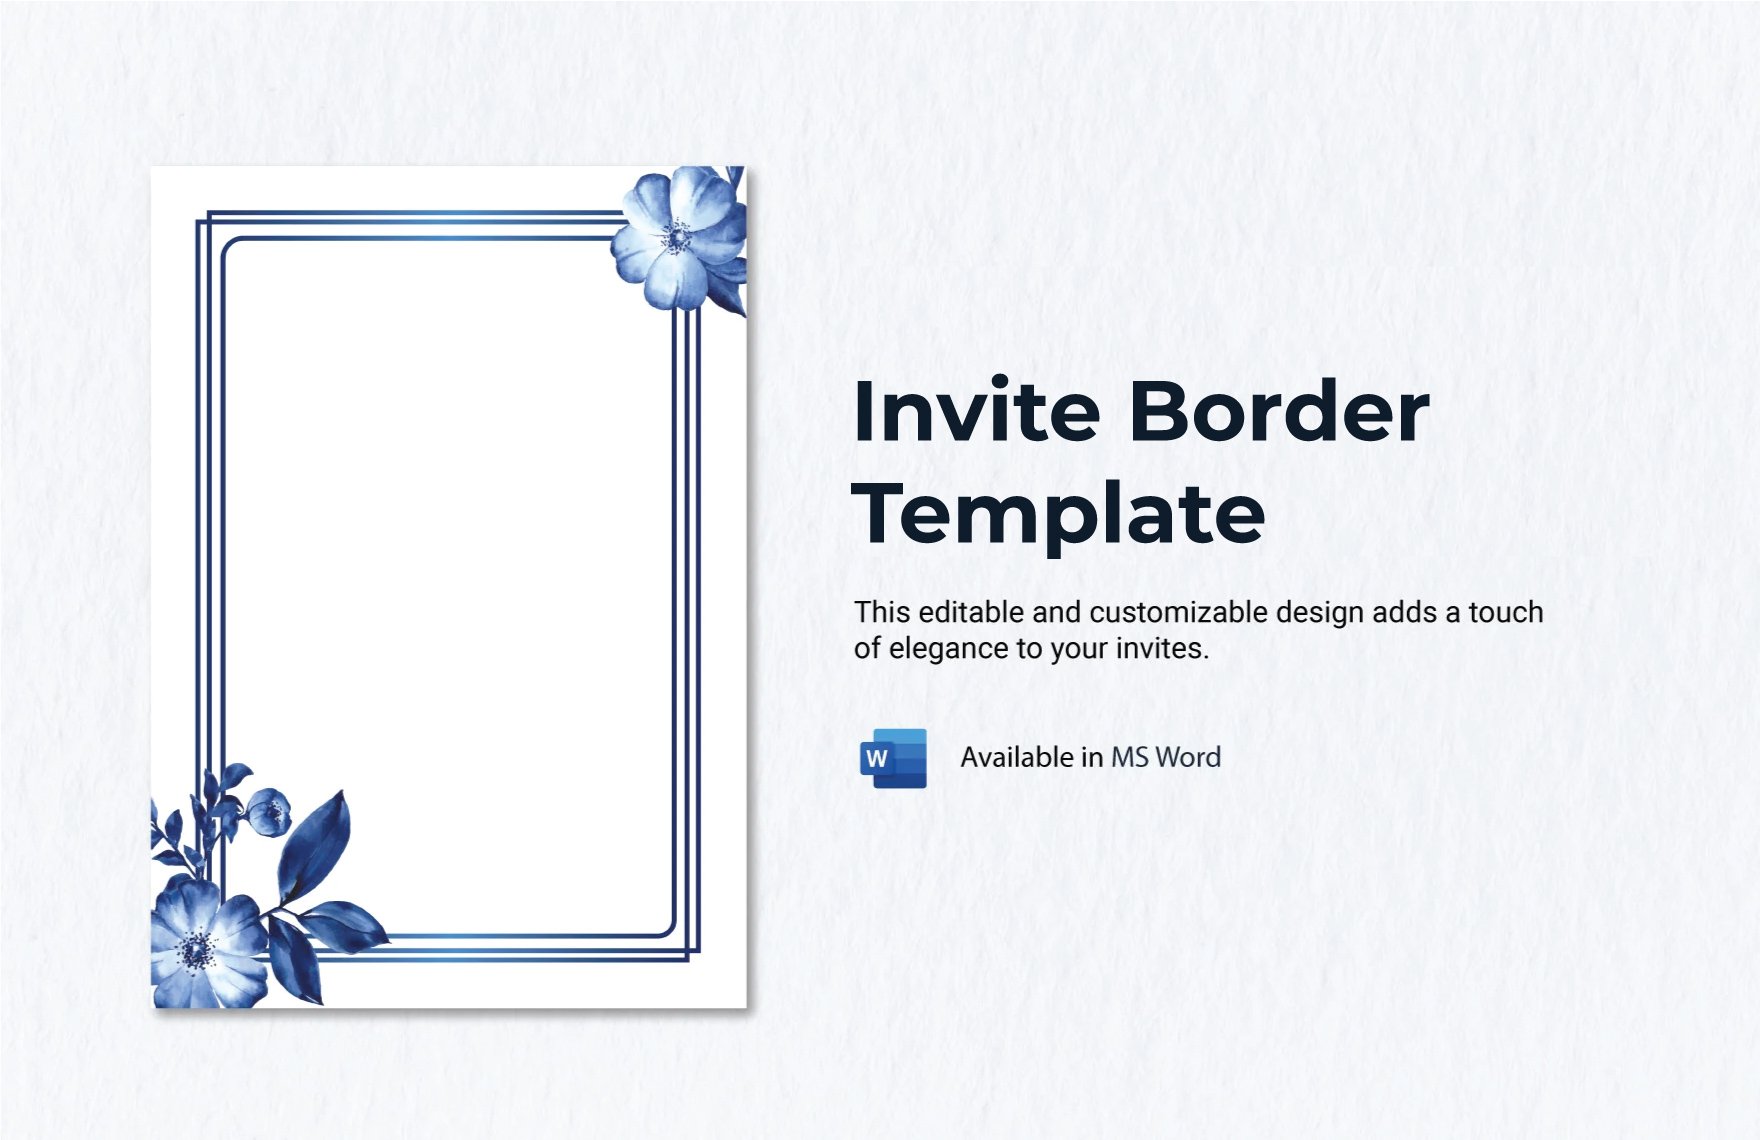 Free Invite Border Template in Word